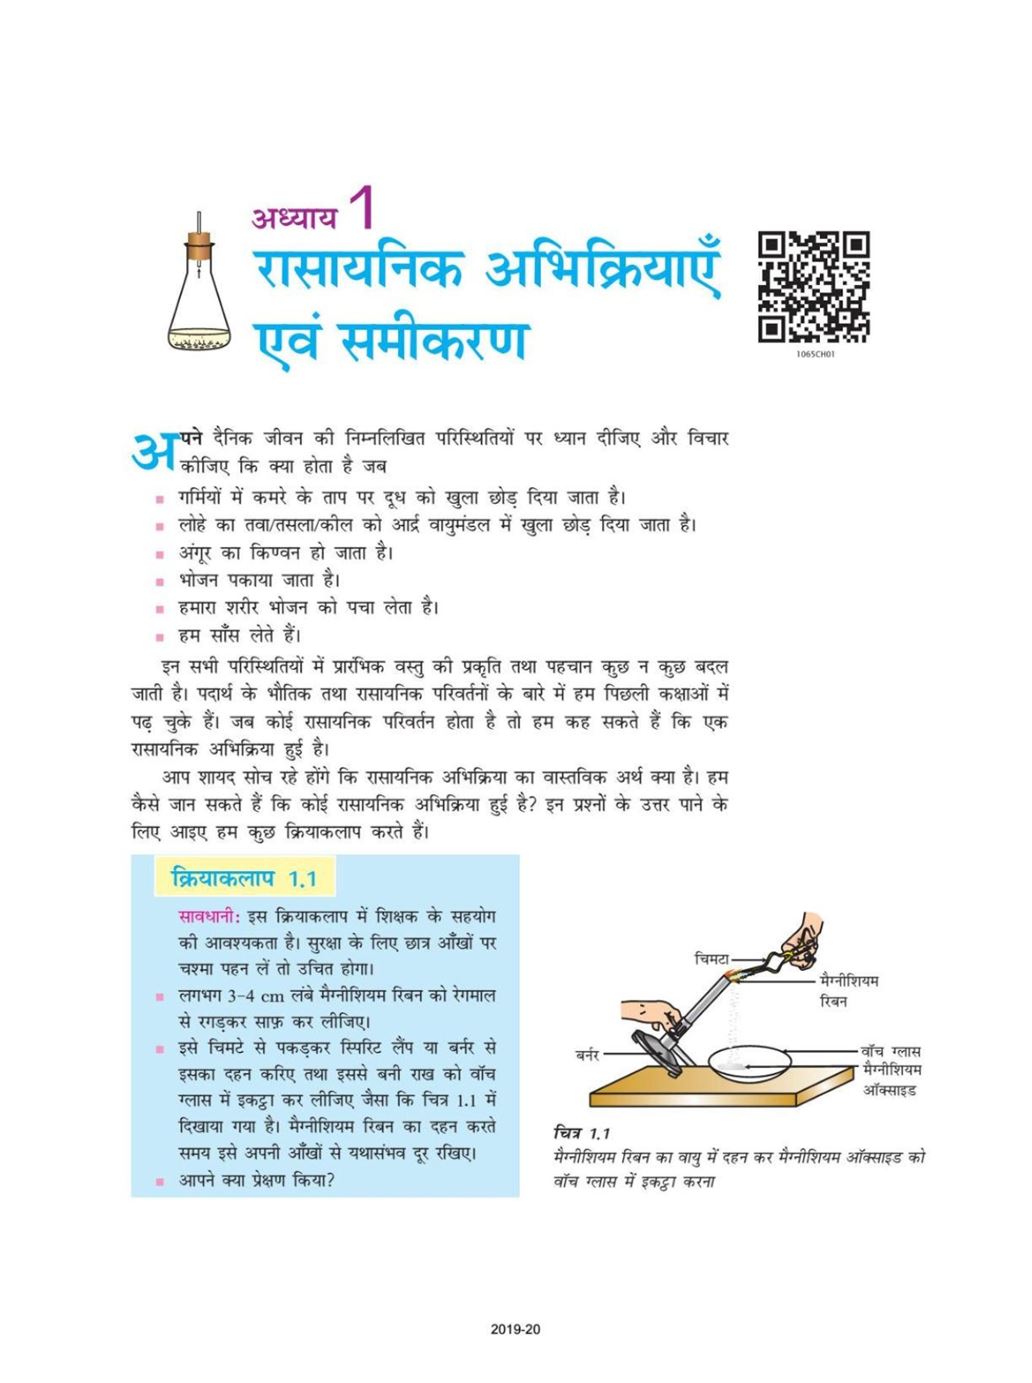 Bihar Board Class 10 Vigyan TextBook - Page 1